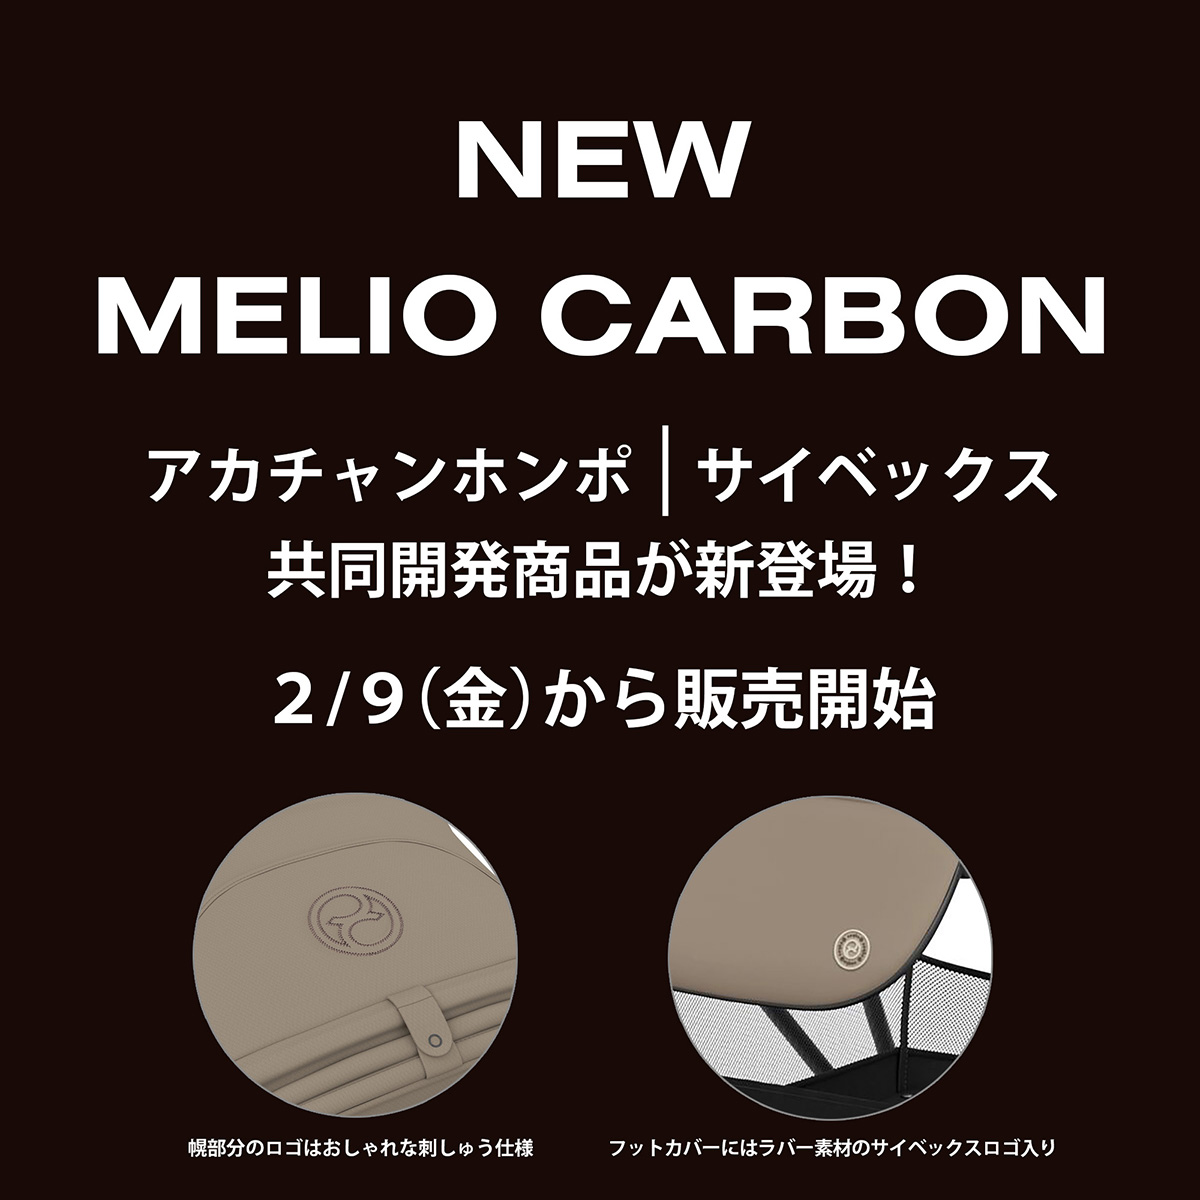 NEW MELIO CARBON アカチャンホンポ・サイベックス共同開発商品が新登場！ 2/9(金)から販売開始